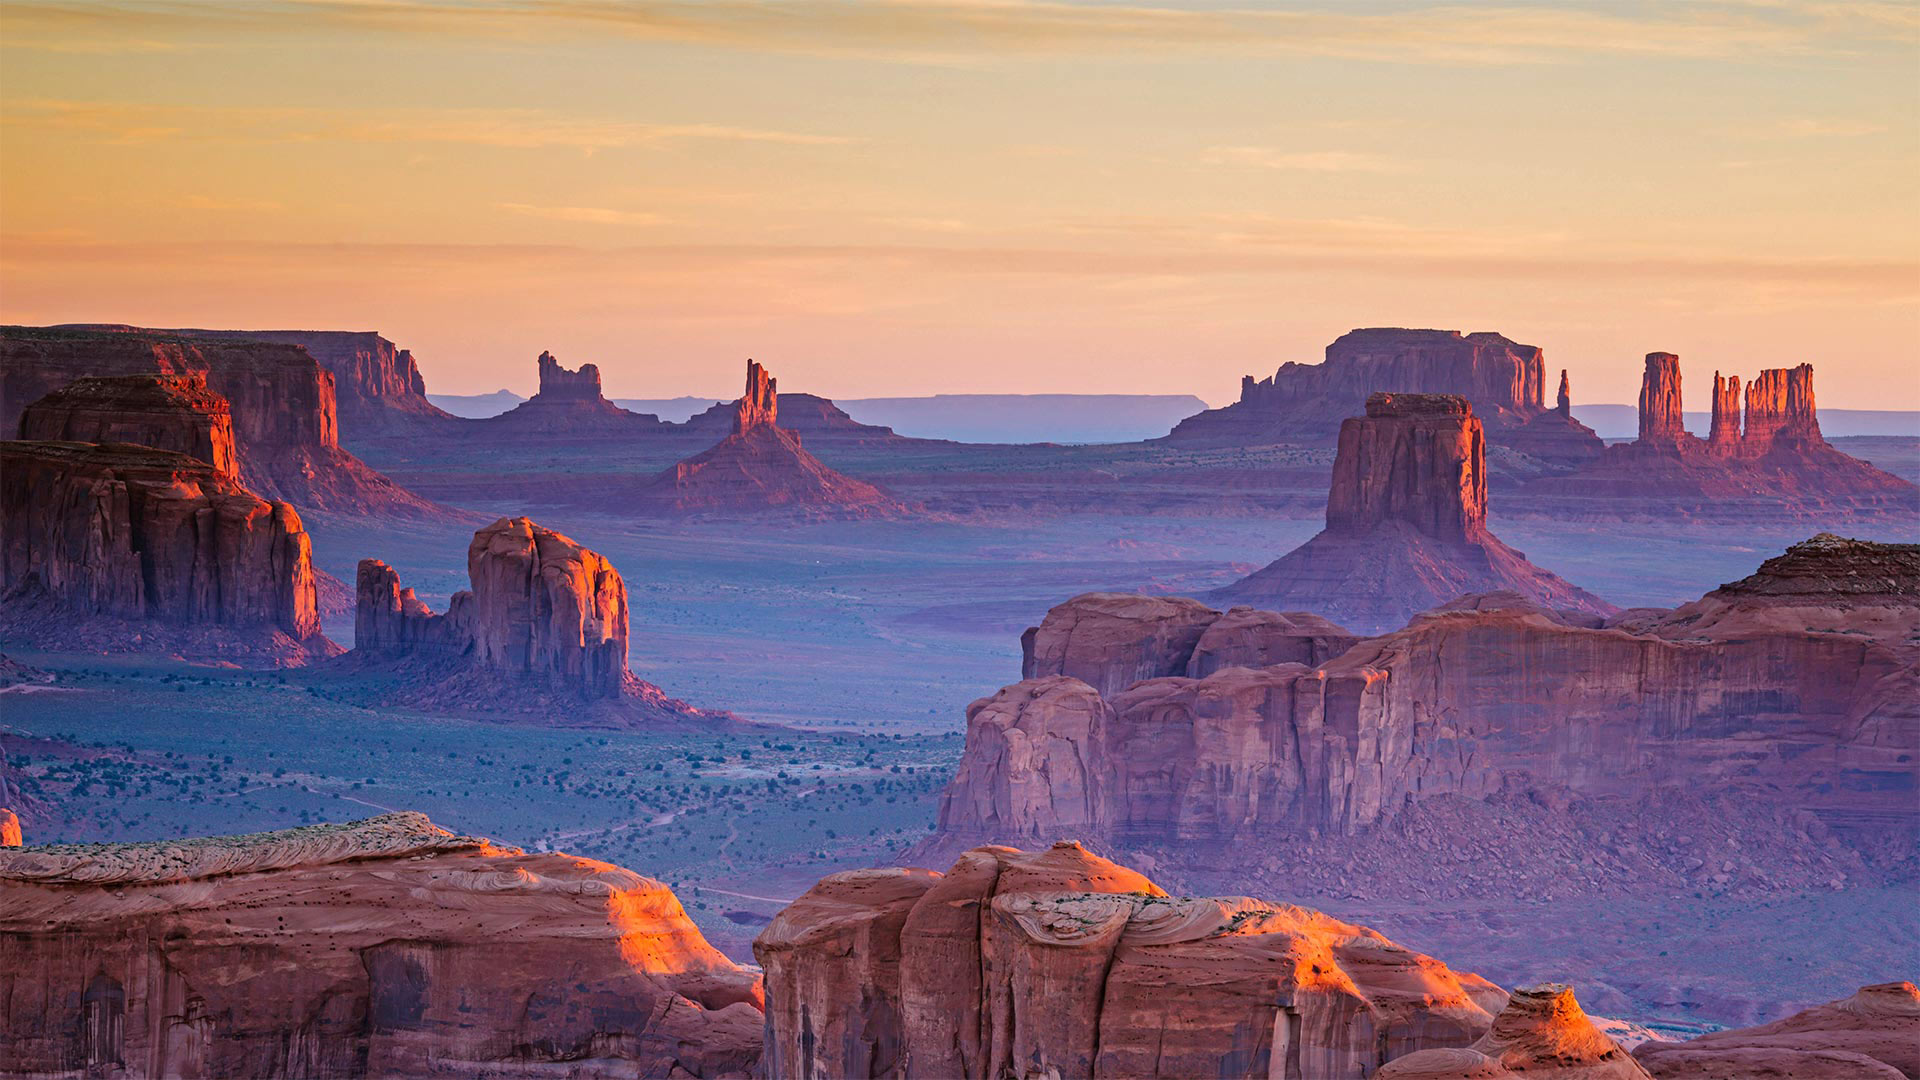 A view of Monument Valley Navajo Tribal Park from Hunts Mesa, Navajo Nation, between Arizona and Utah - AWL Images/Danita Delimont)